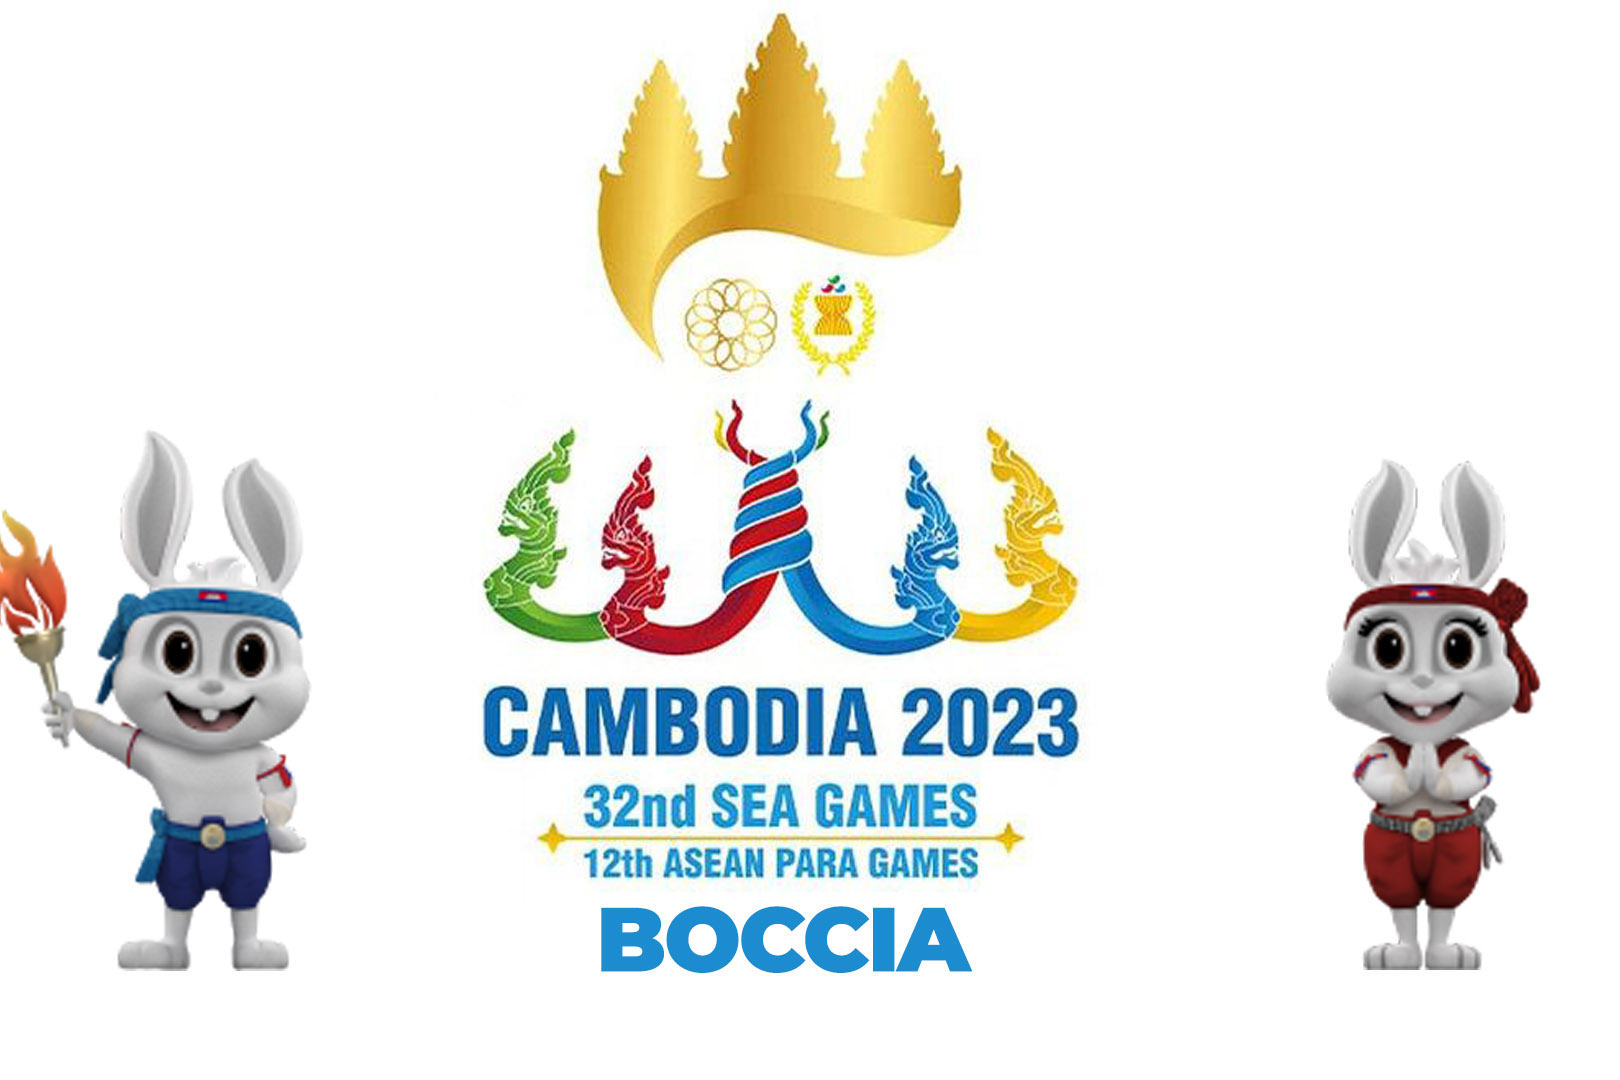 ASEAN Para Games 2023 Para Boccia - Imsport.tv